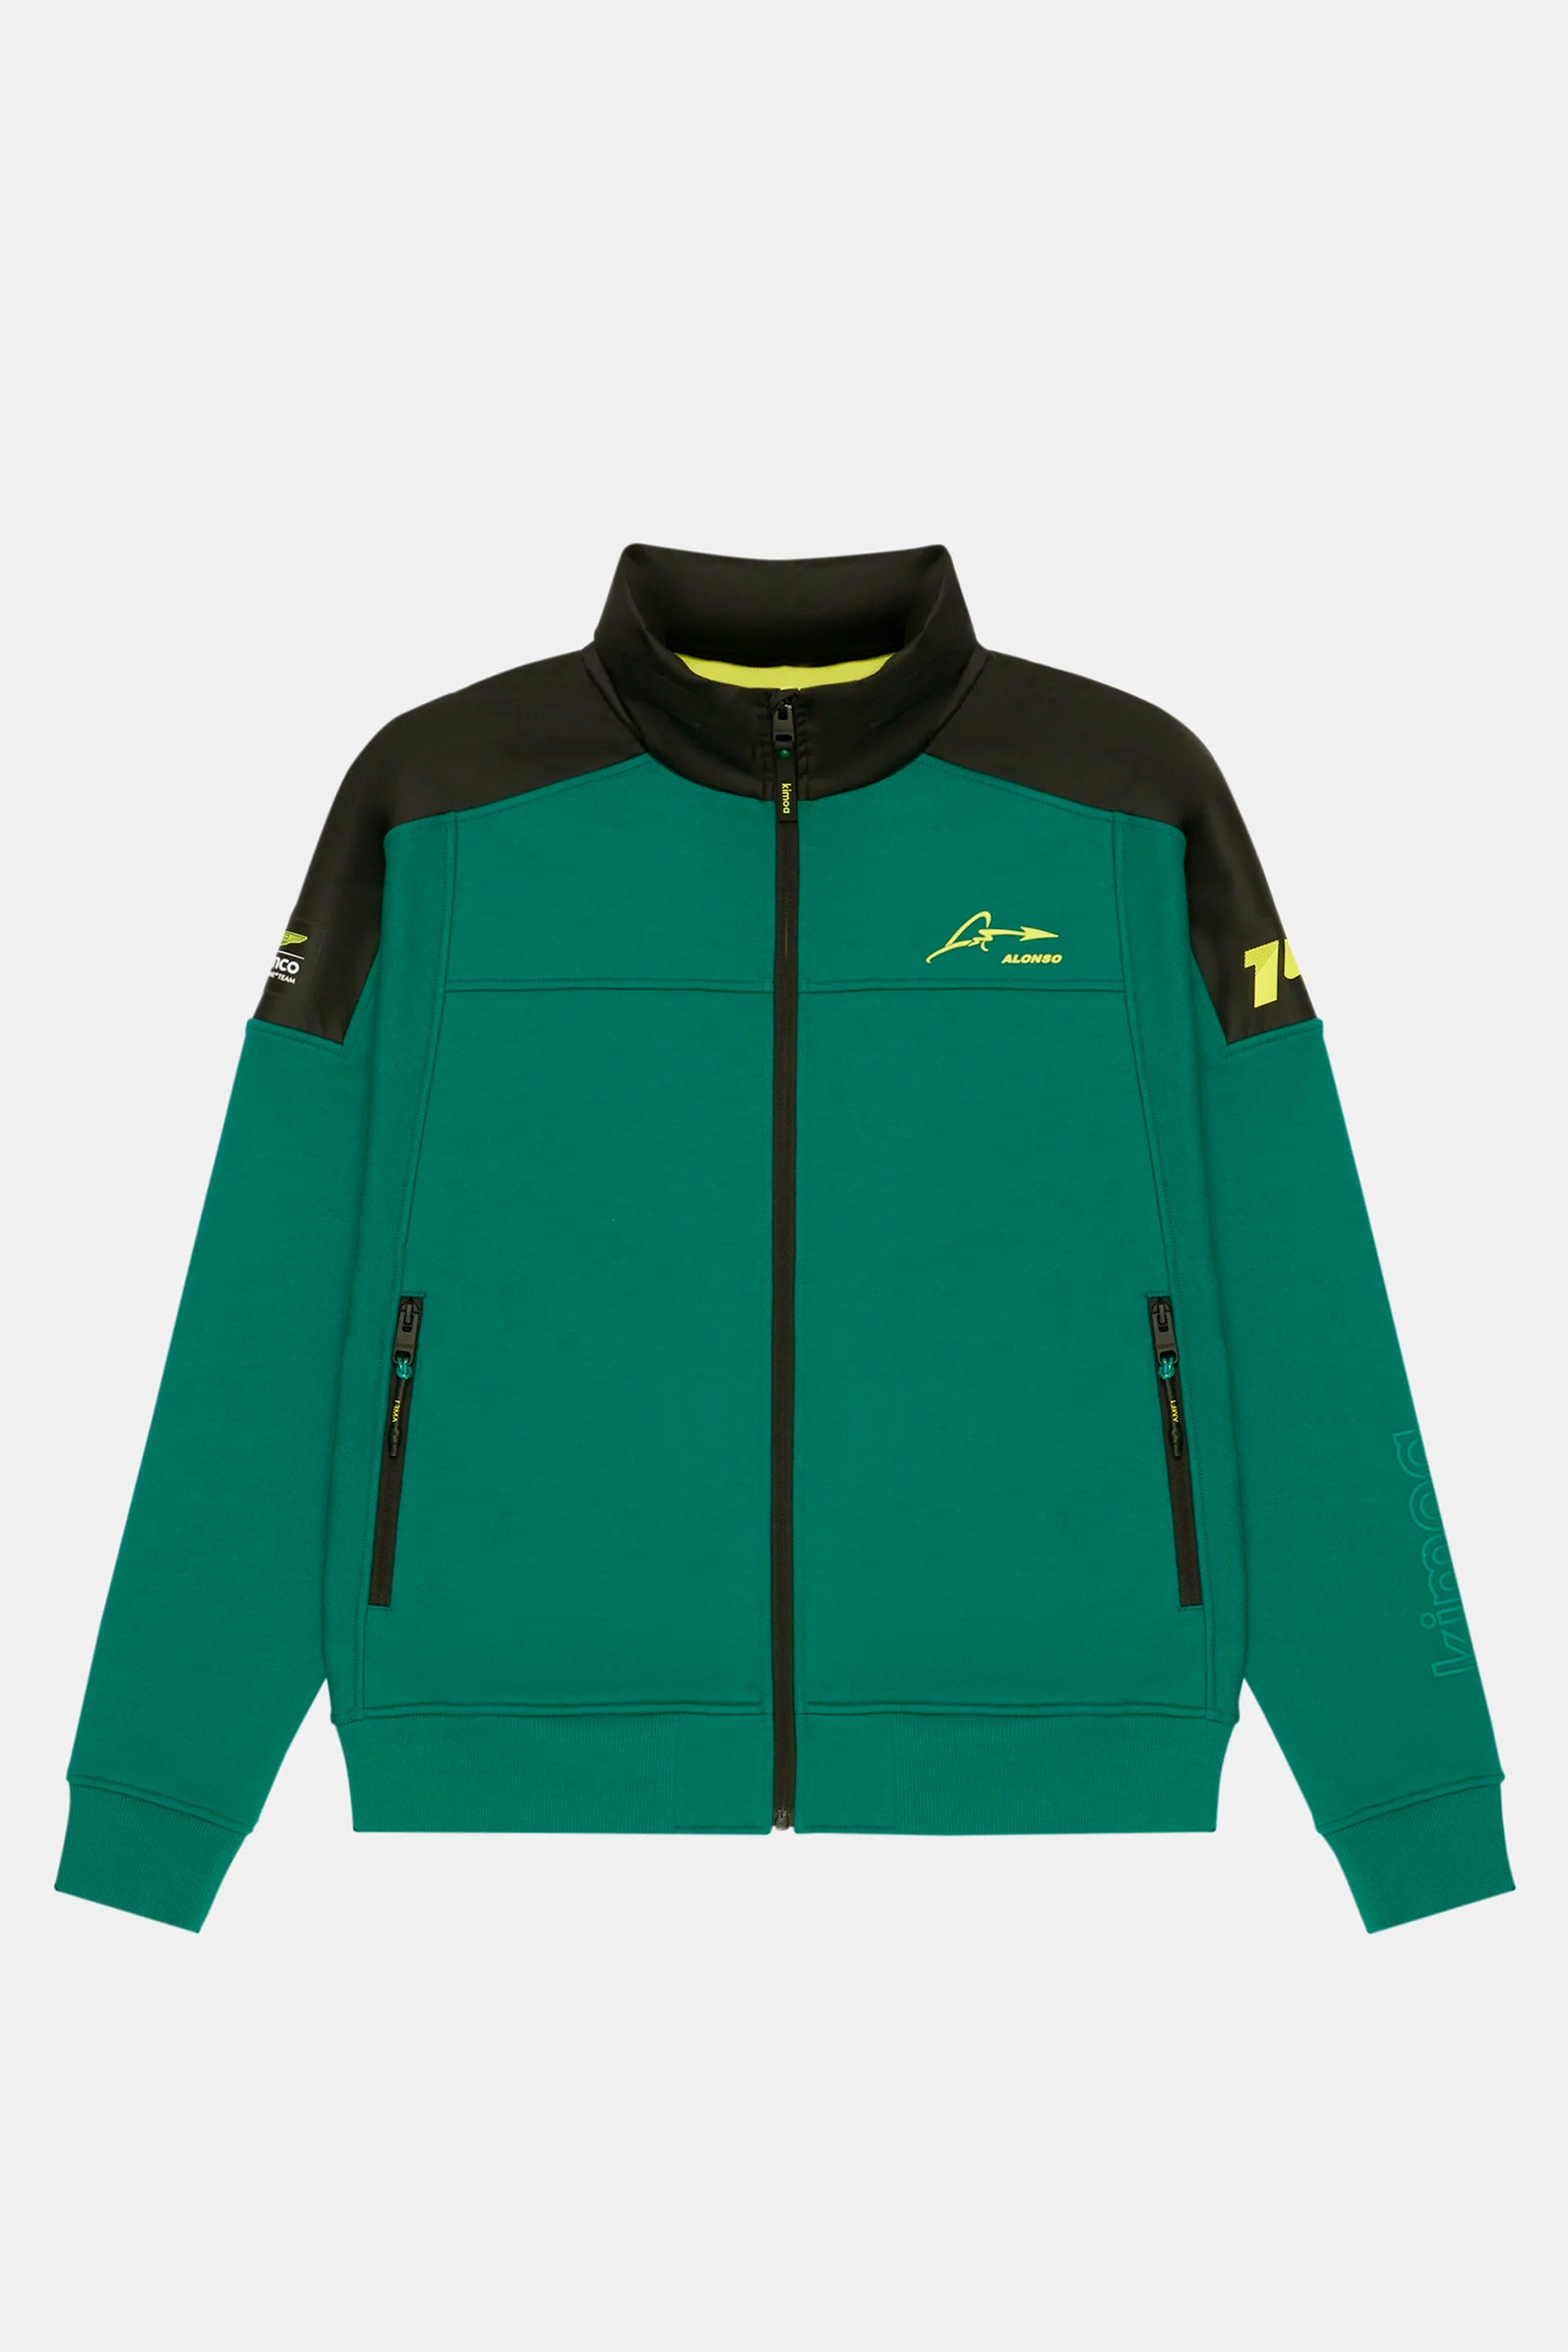 Aston Martin F1 Team x Kimoa Bicolor Sweat Jacket green